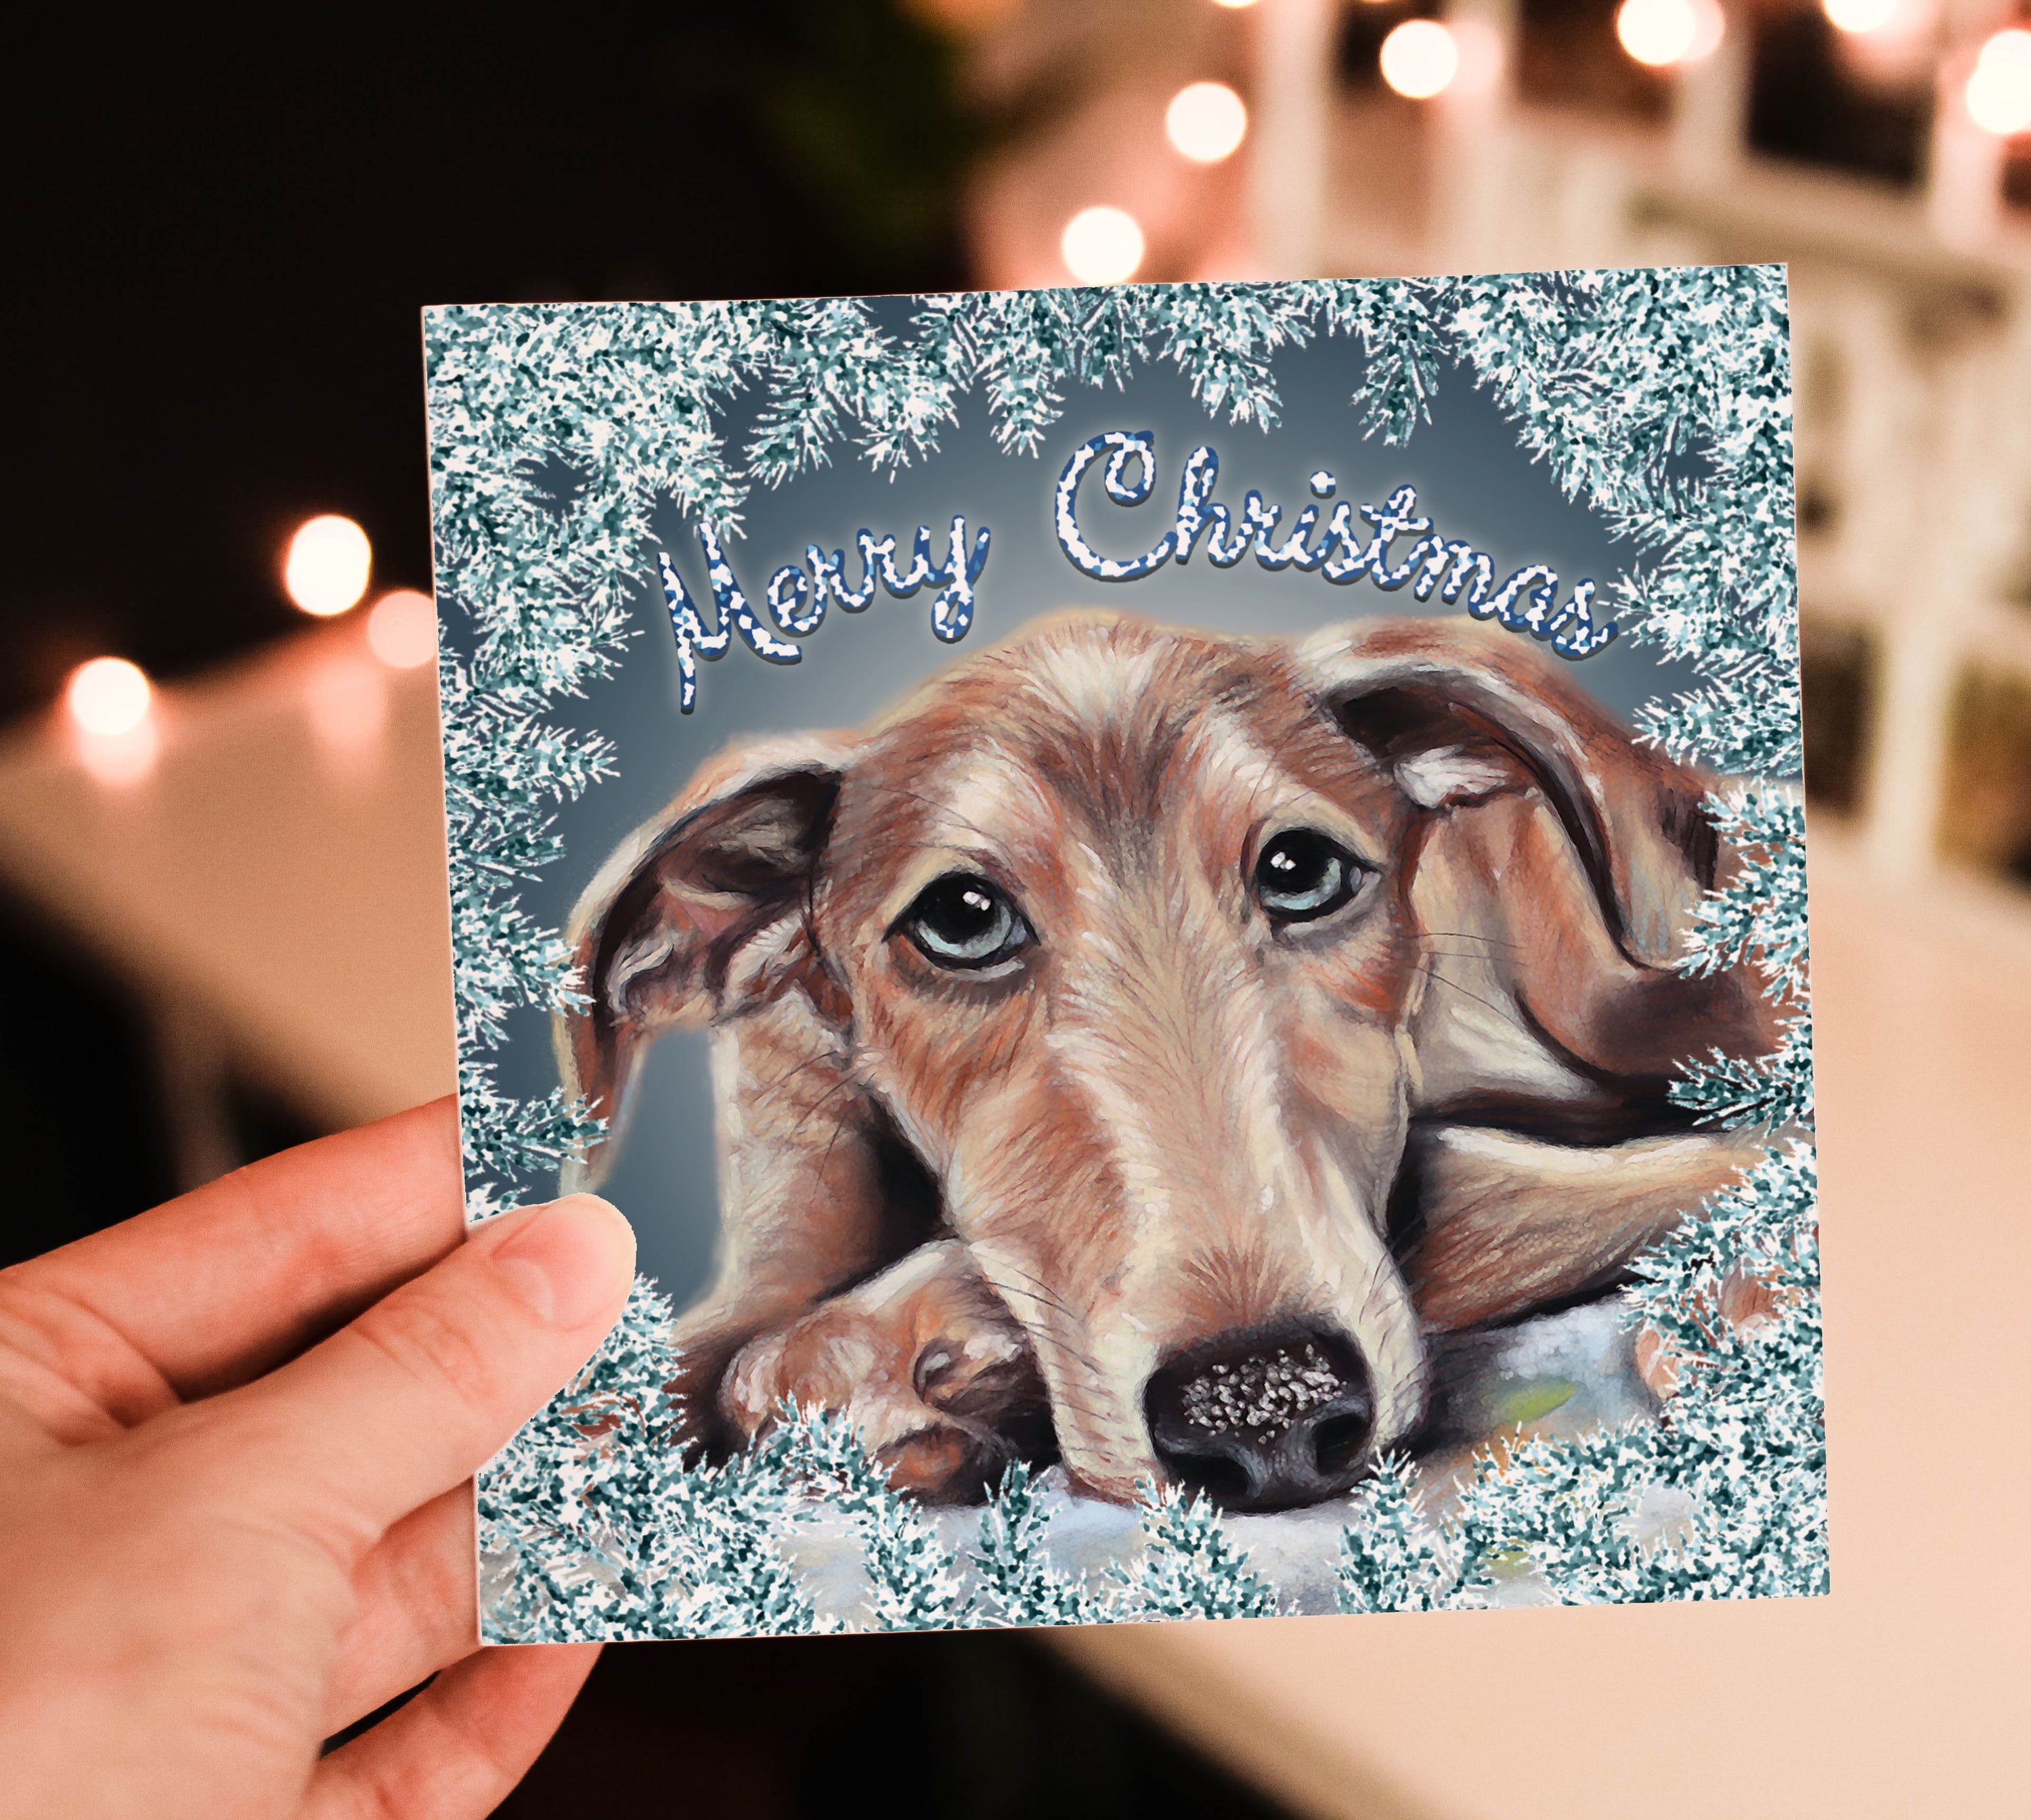 Lurcher Christmas Card